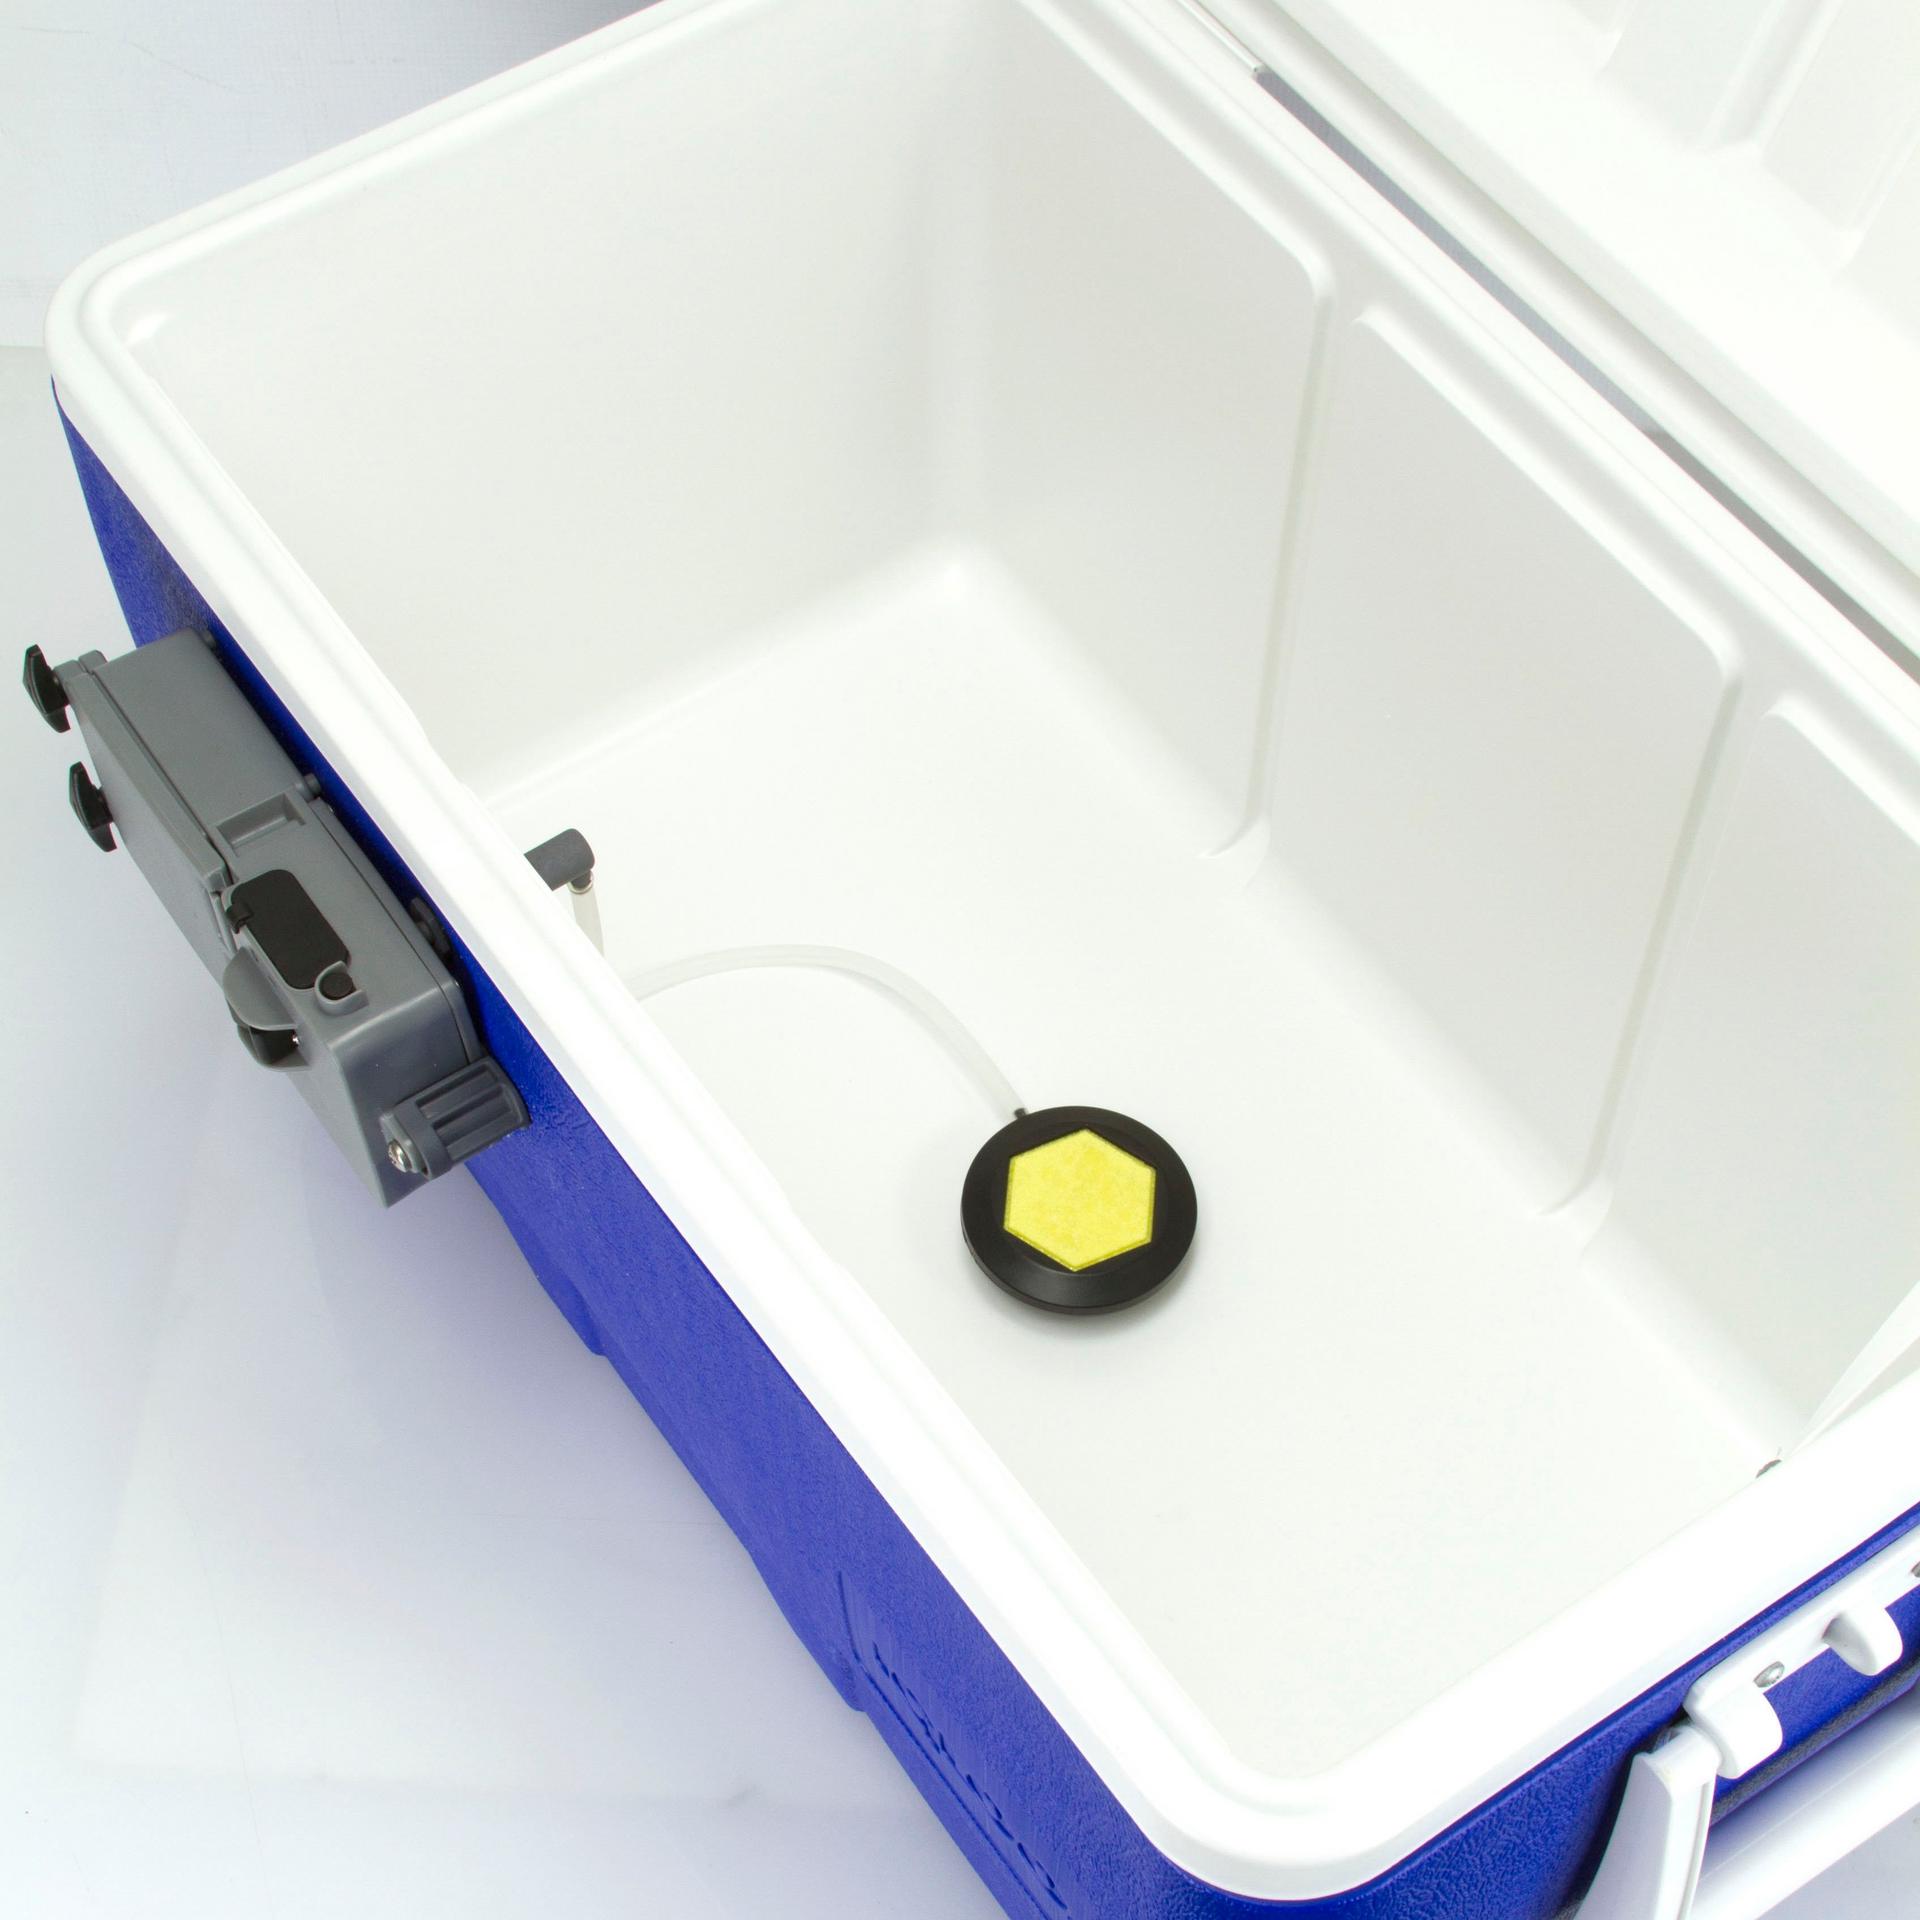 Aqua-Life Cooler Aeration System | FRABILL® 